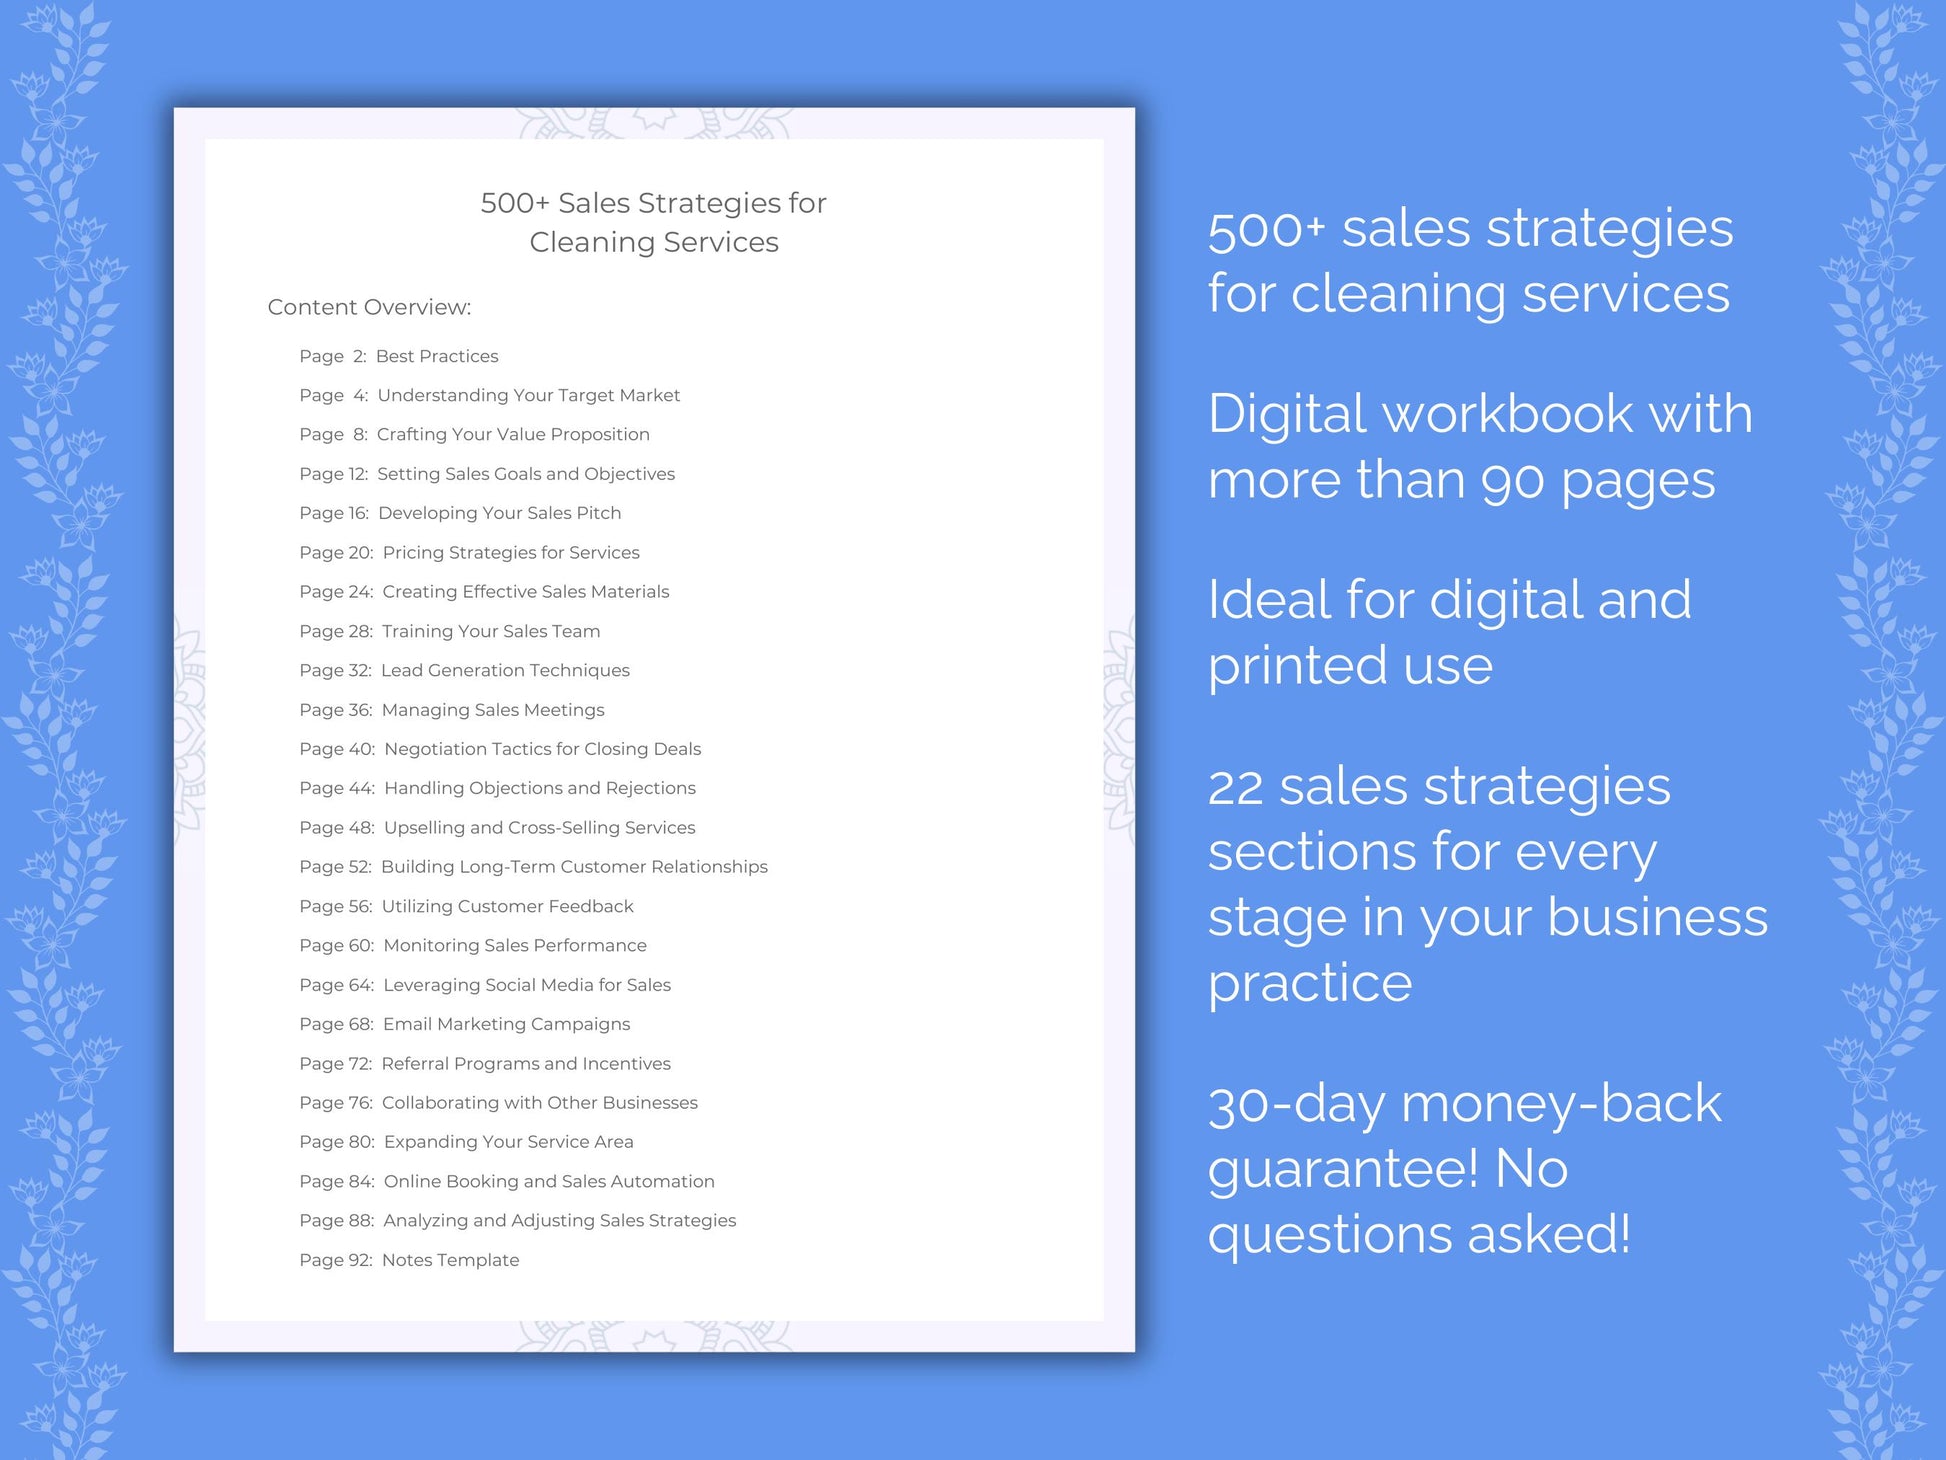 Cleaning Services Sales Strategies Workbook